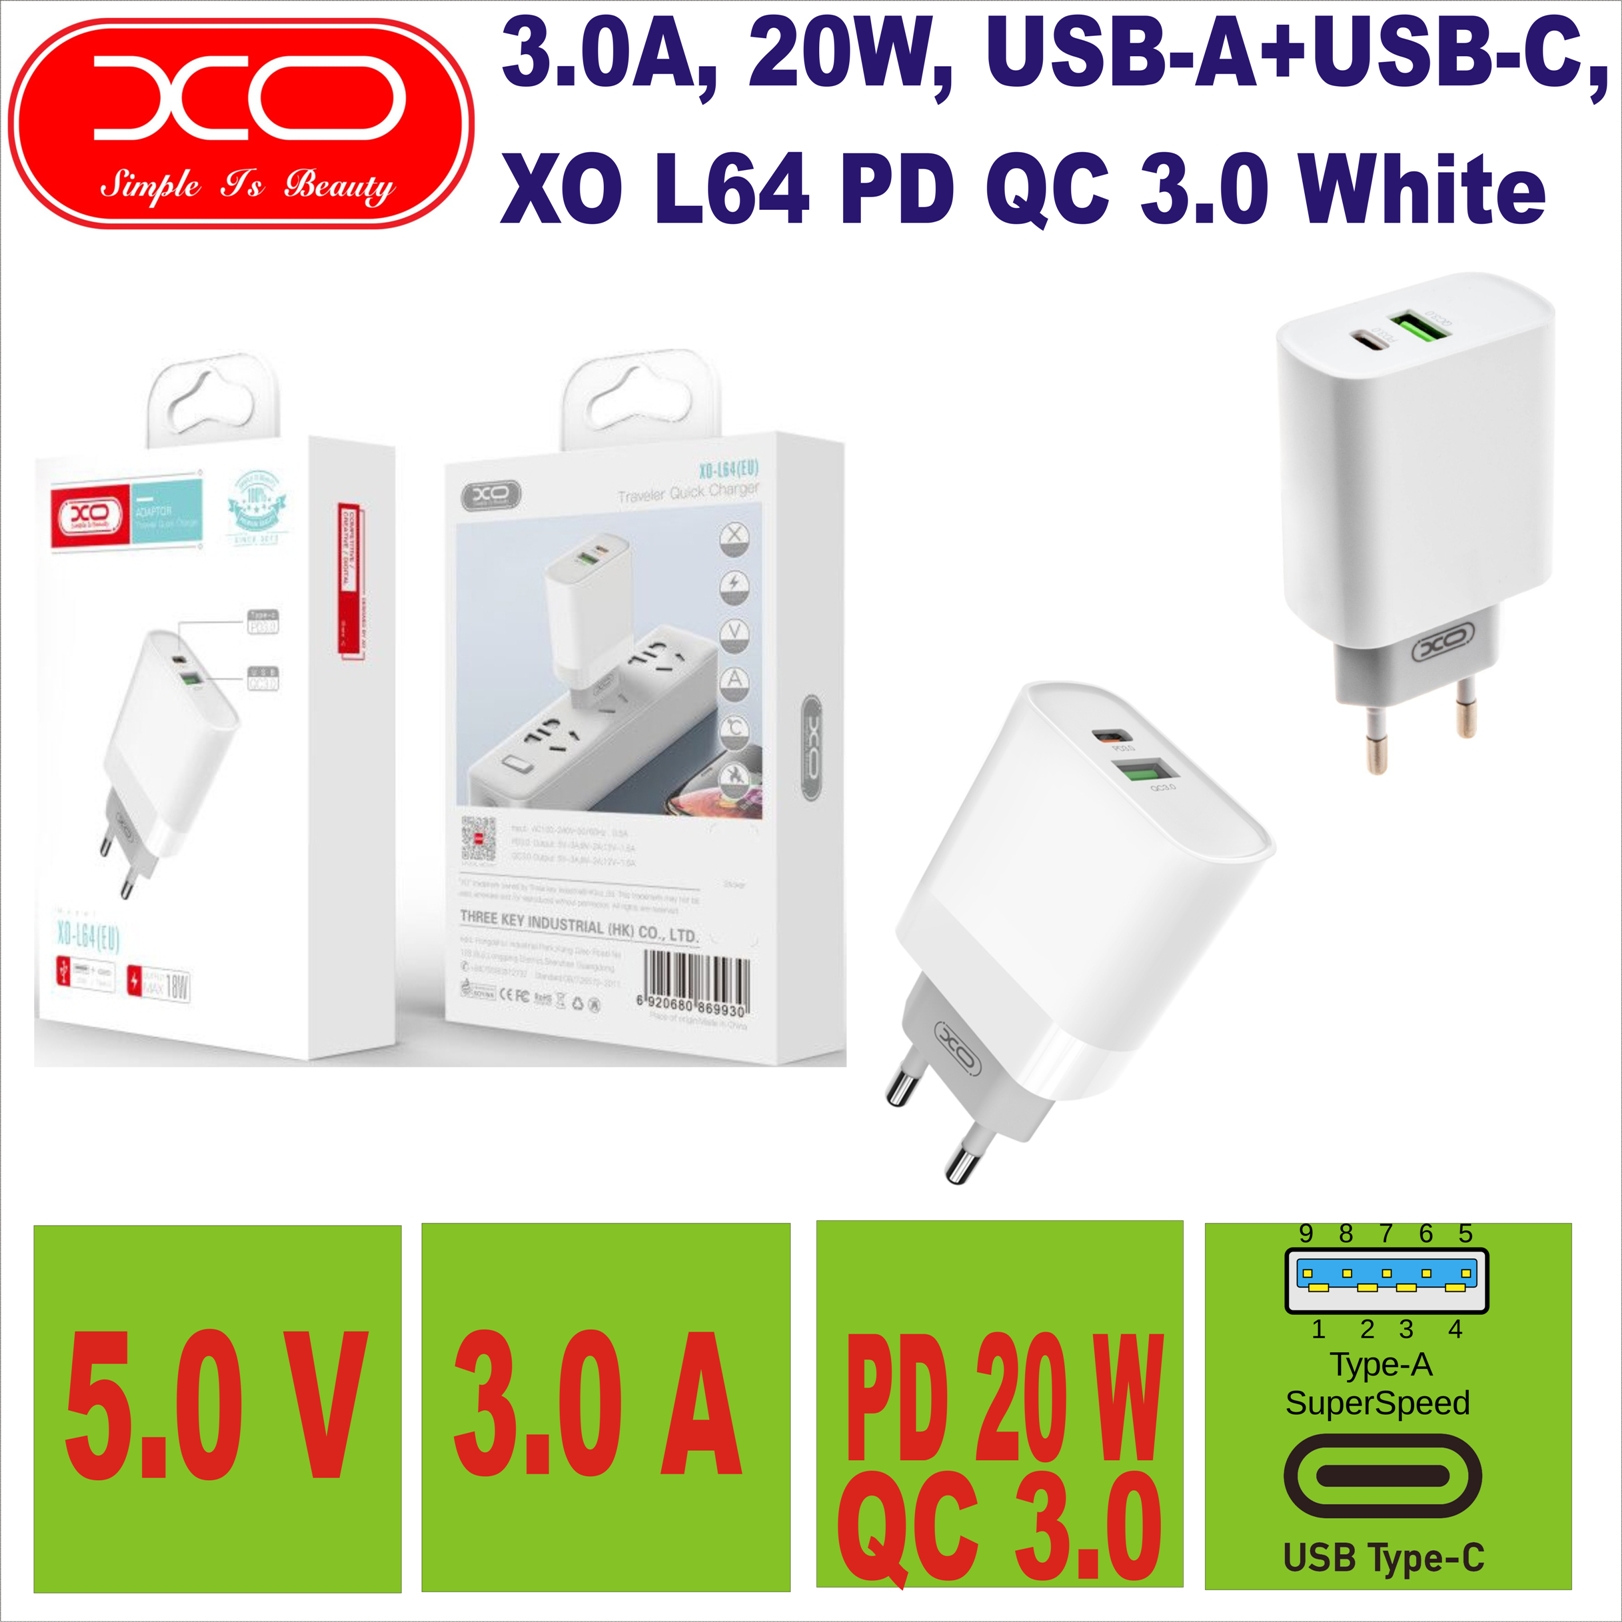 3.0A, 20W, USB-A+USB-C, XO L64 PD QC 3.0 White